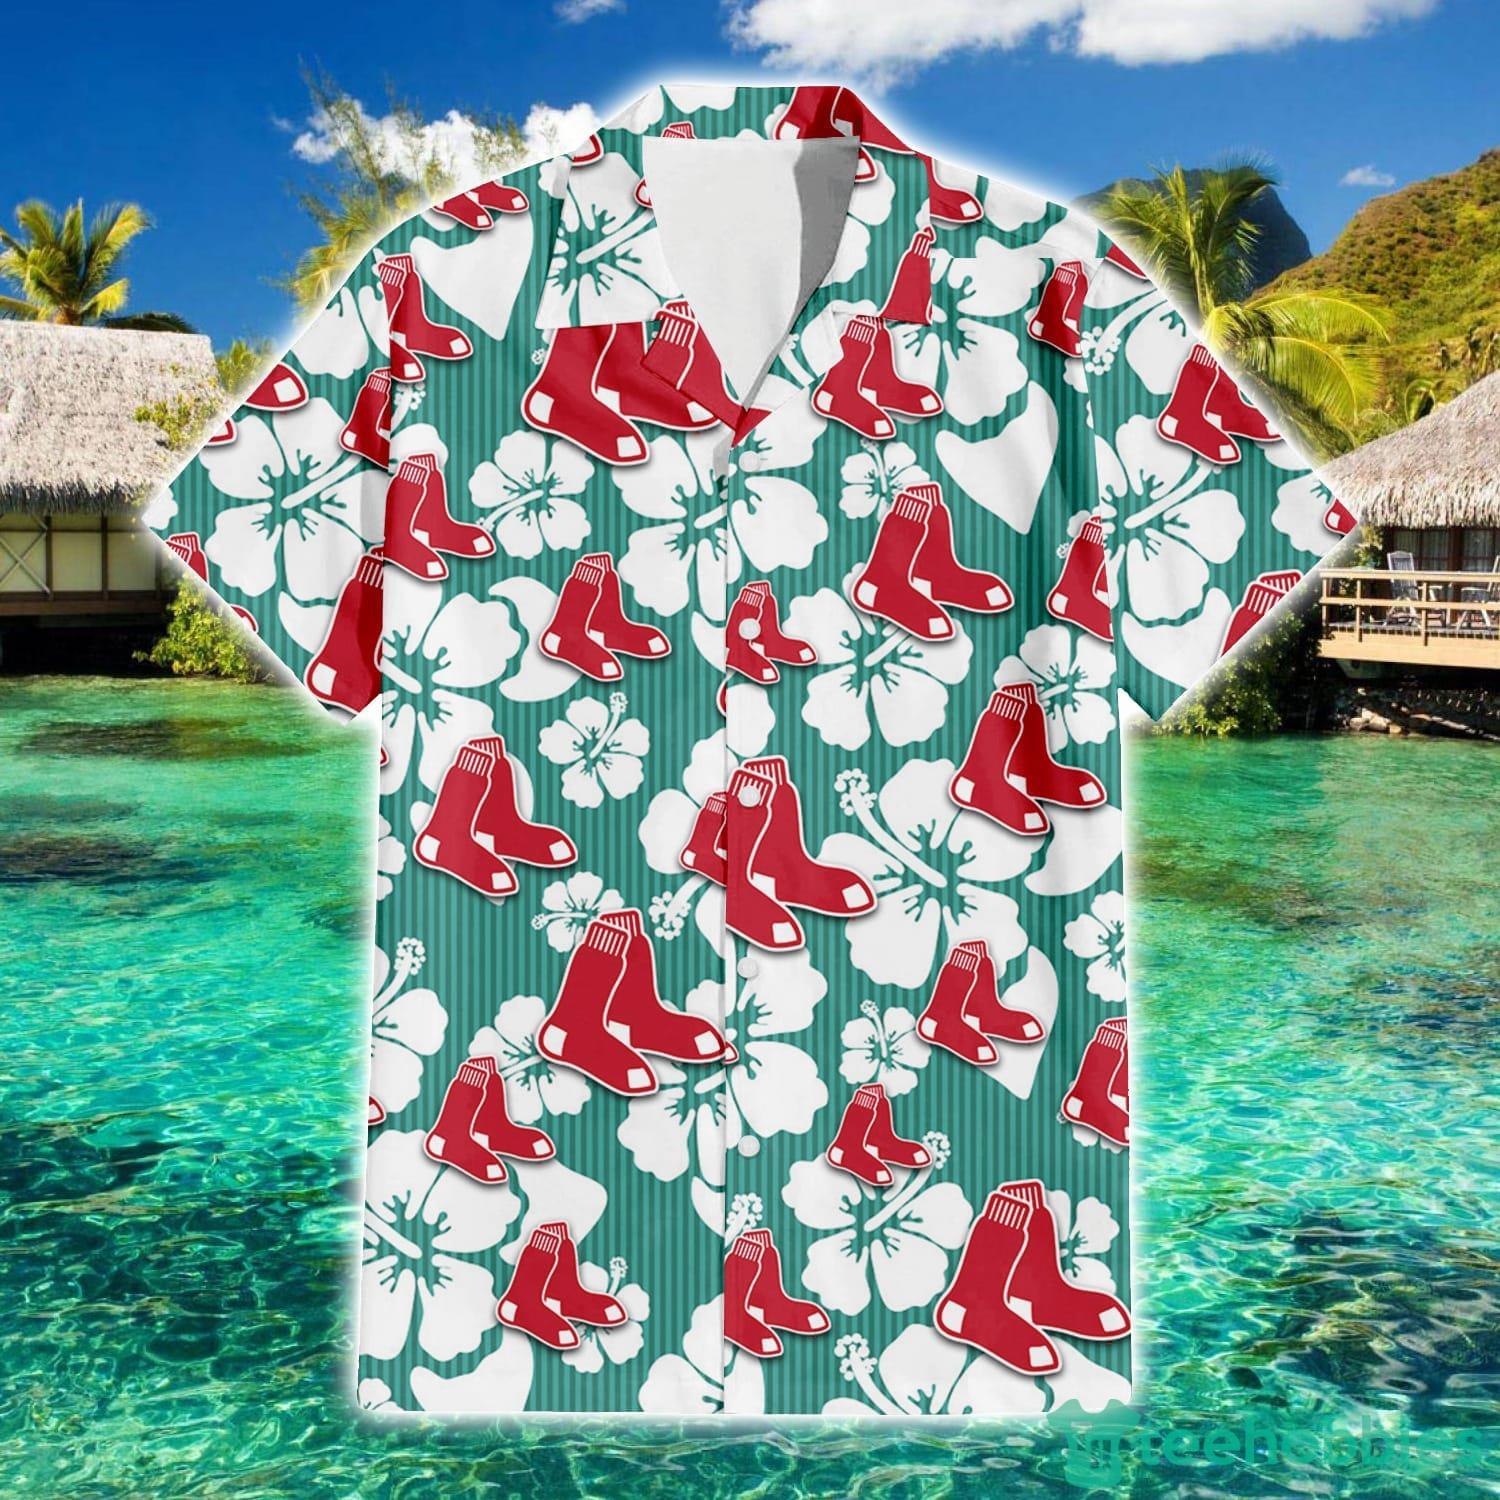 Tampa Bay Lightning NHL Flower Hawaiian Shirt Best Gift For Fans -  Freedomdesign